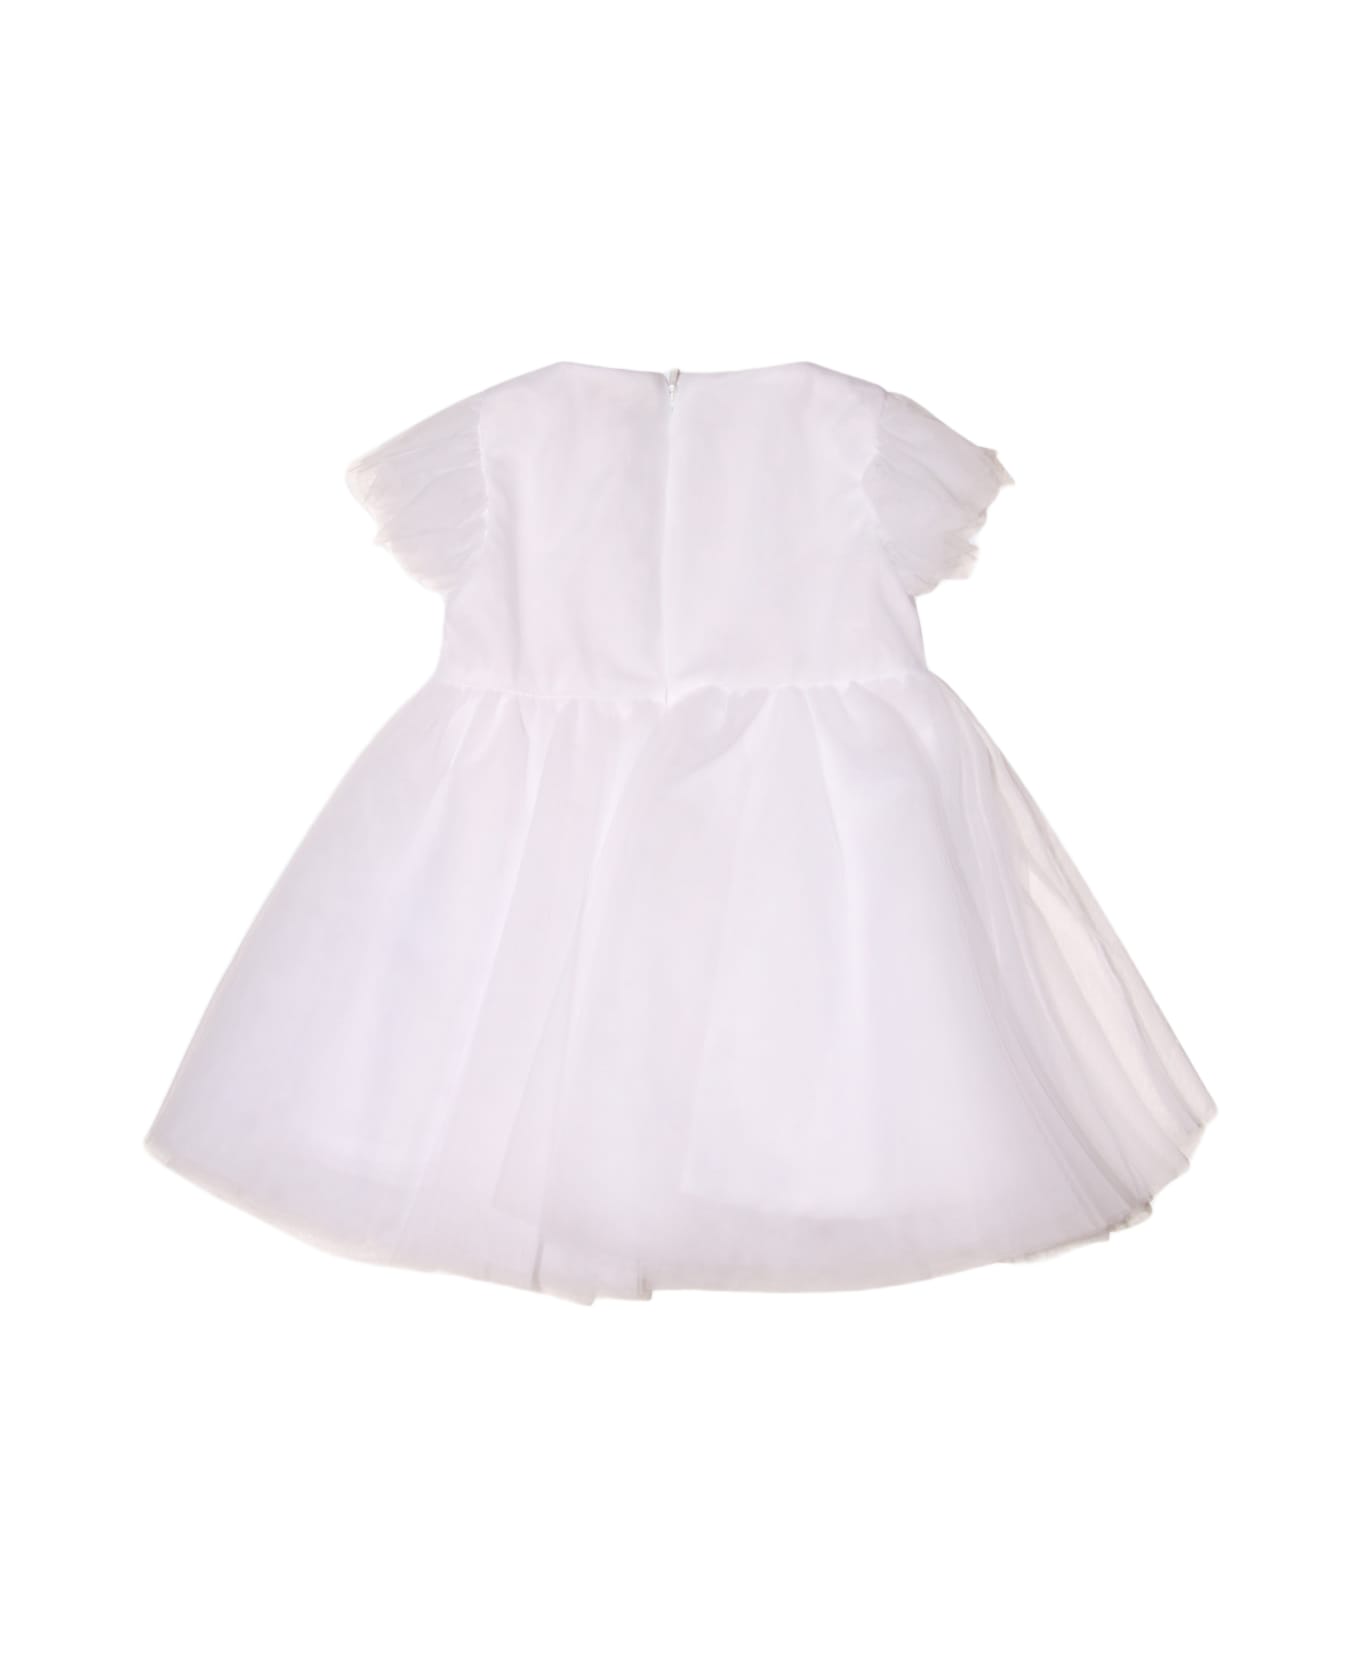 Monnalisa White Cotton Ruffles Dress - White